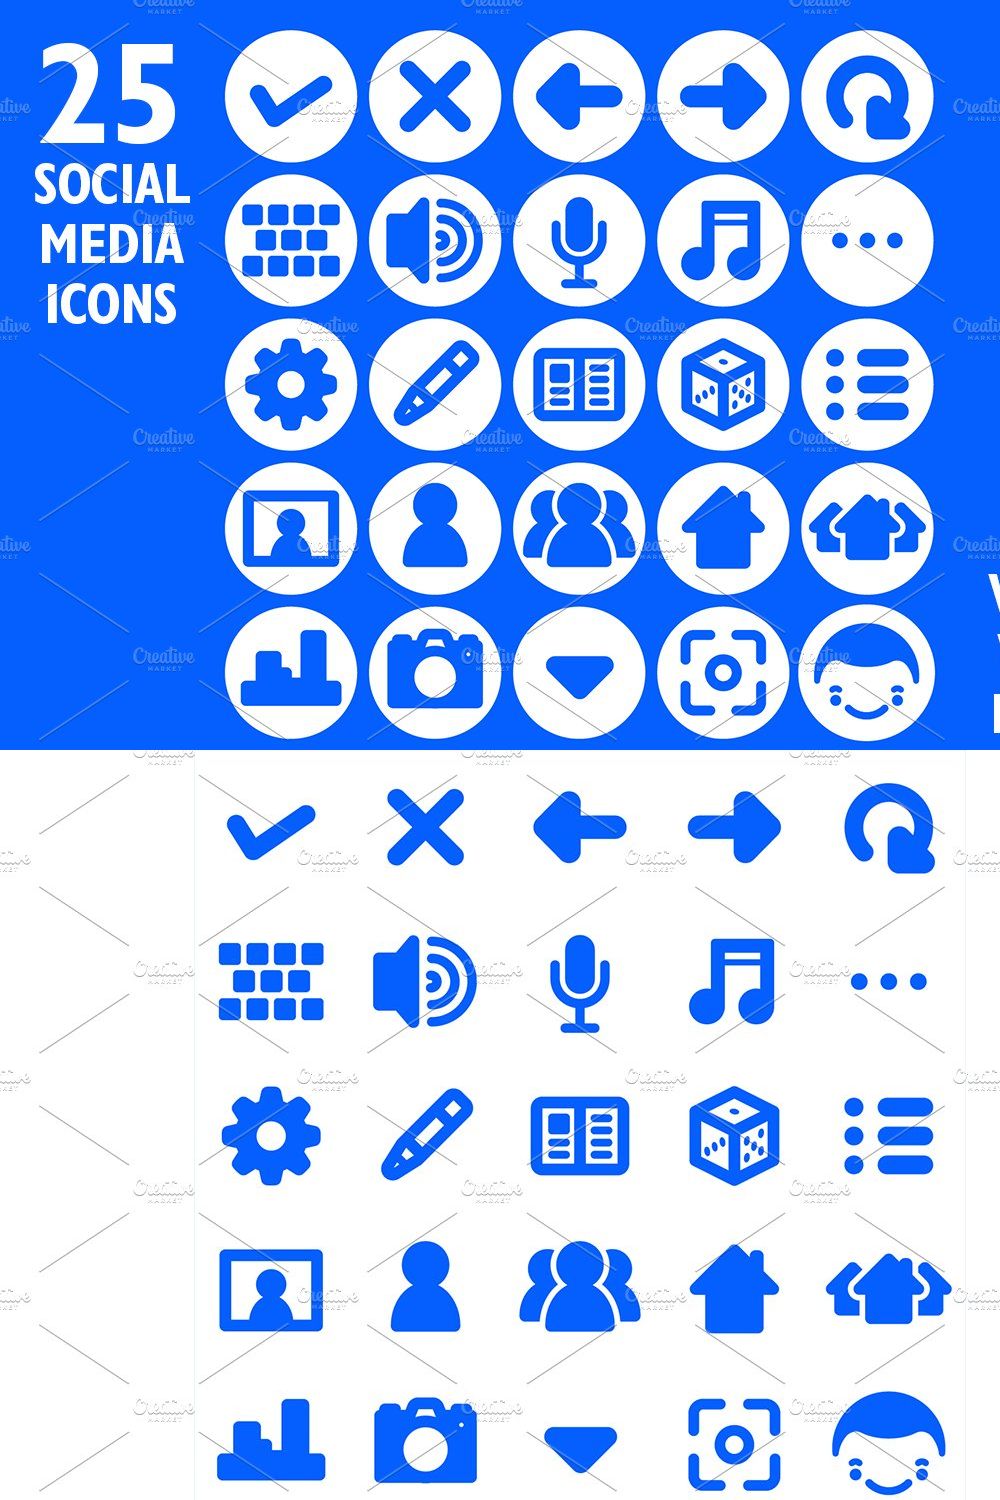 Social Media App Icon Set & Web Font pinterest preview image.